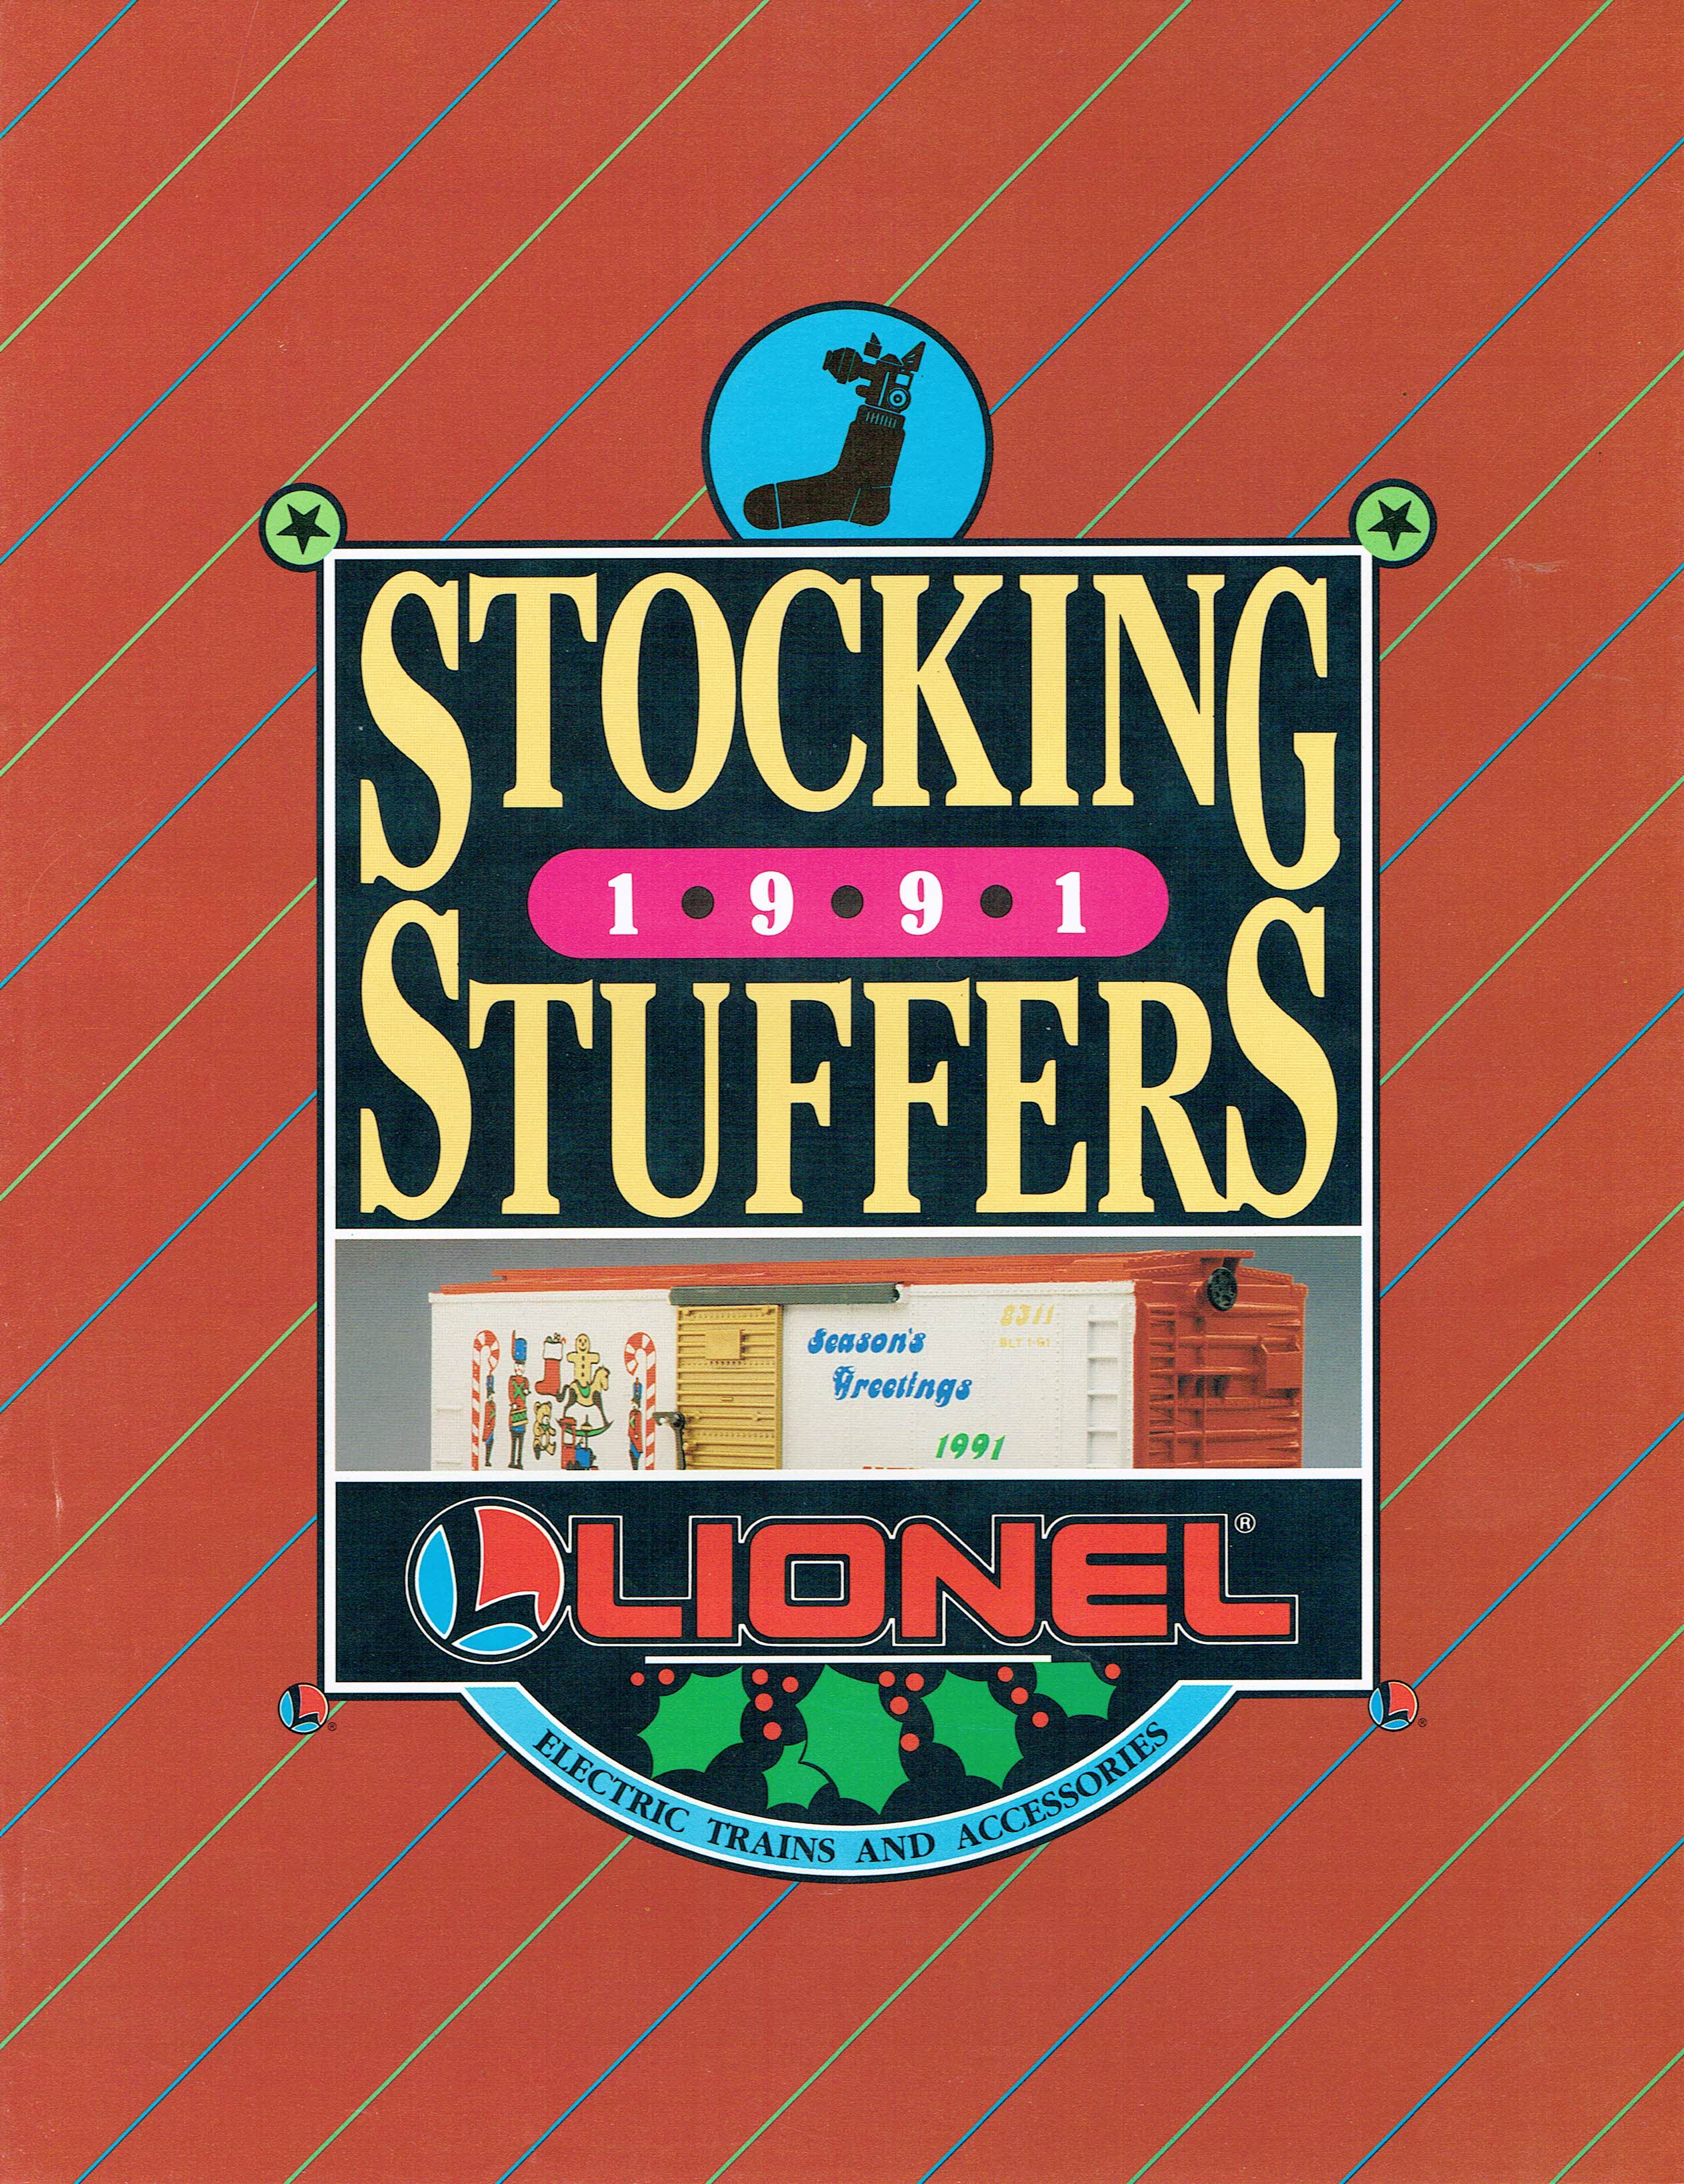 Lionel 1991 Stocking Stuffers Flier image